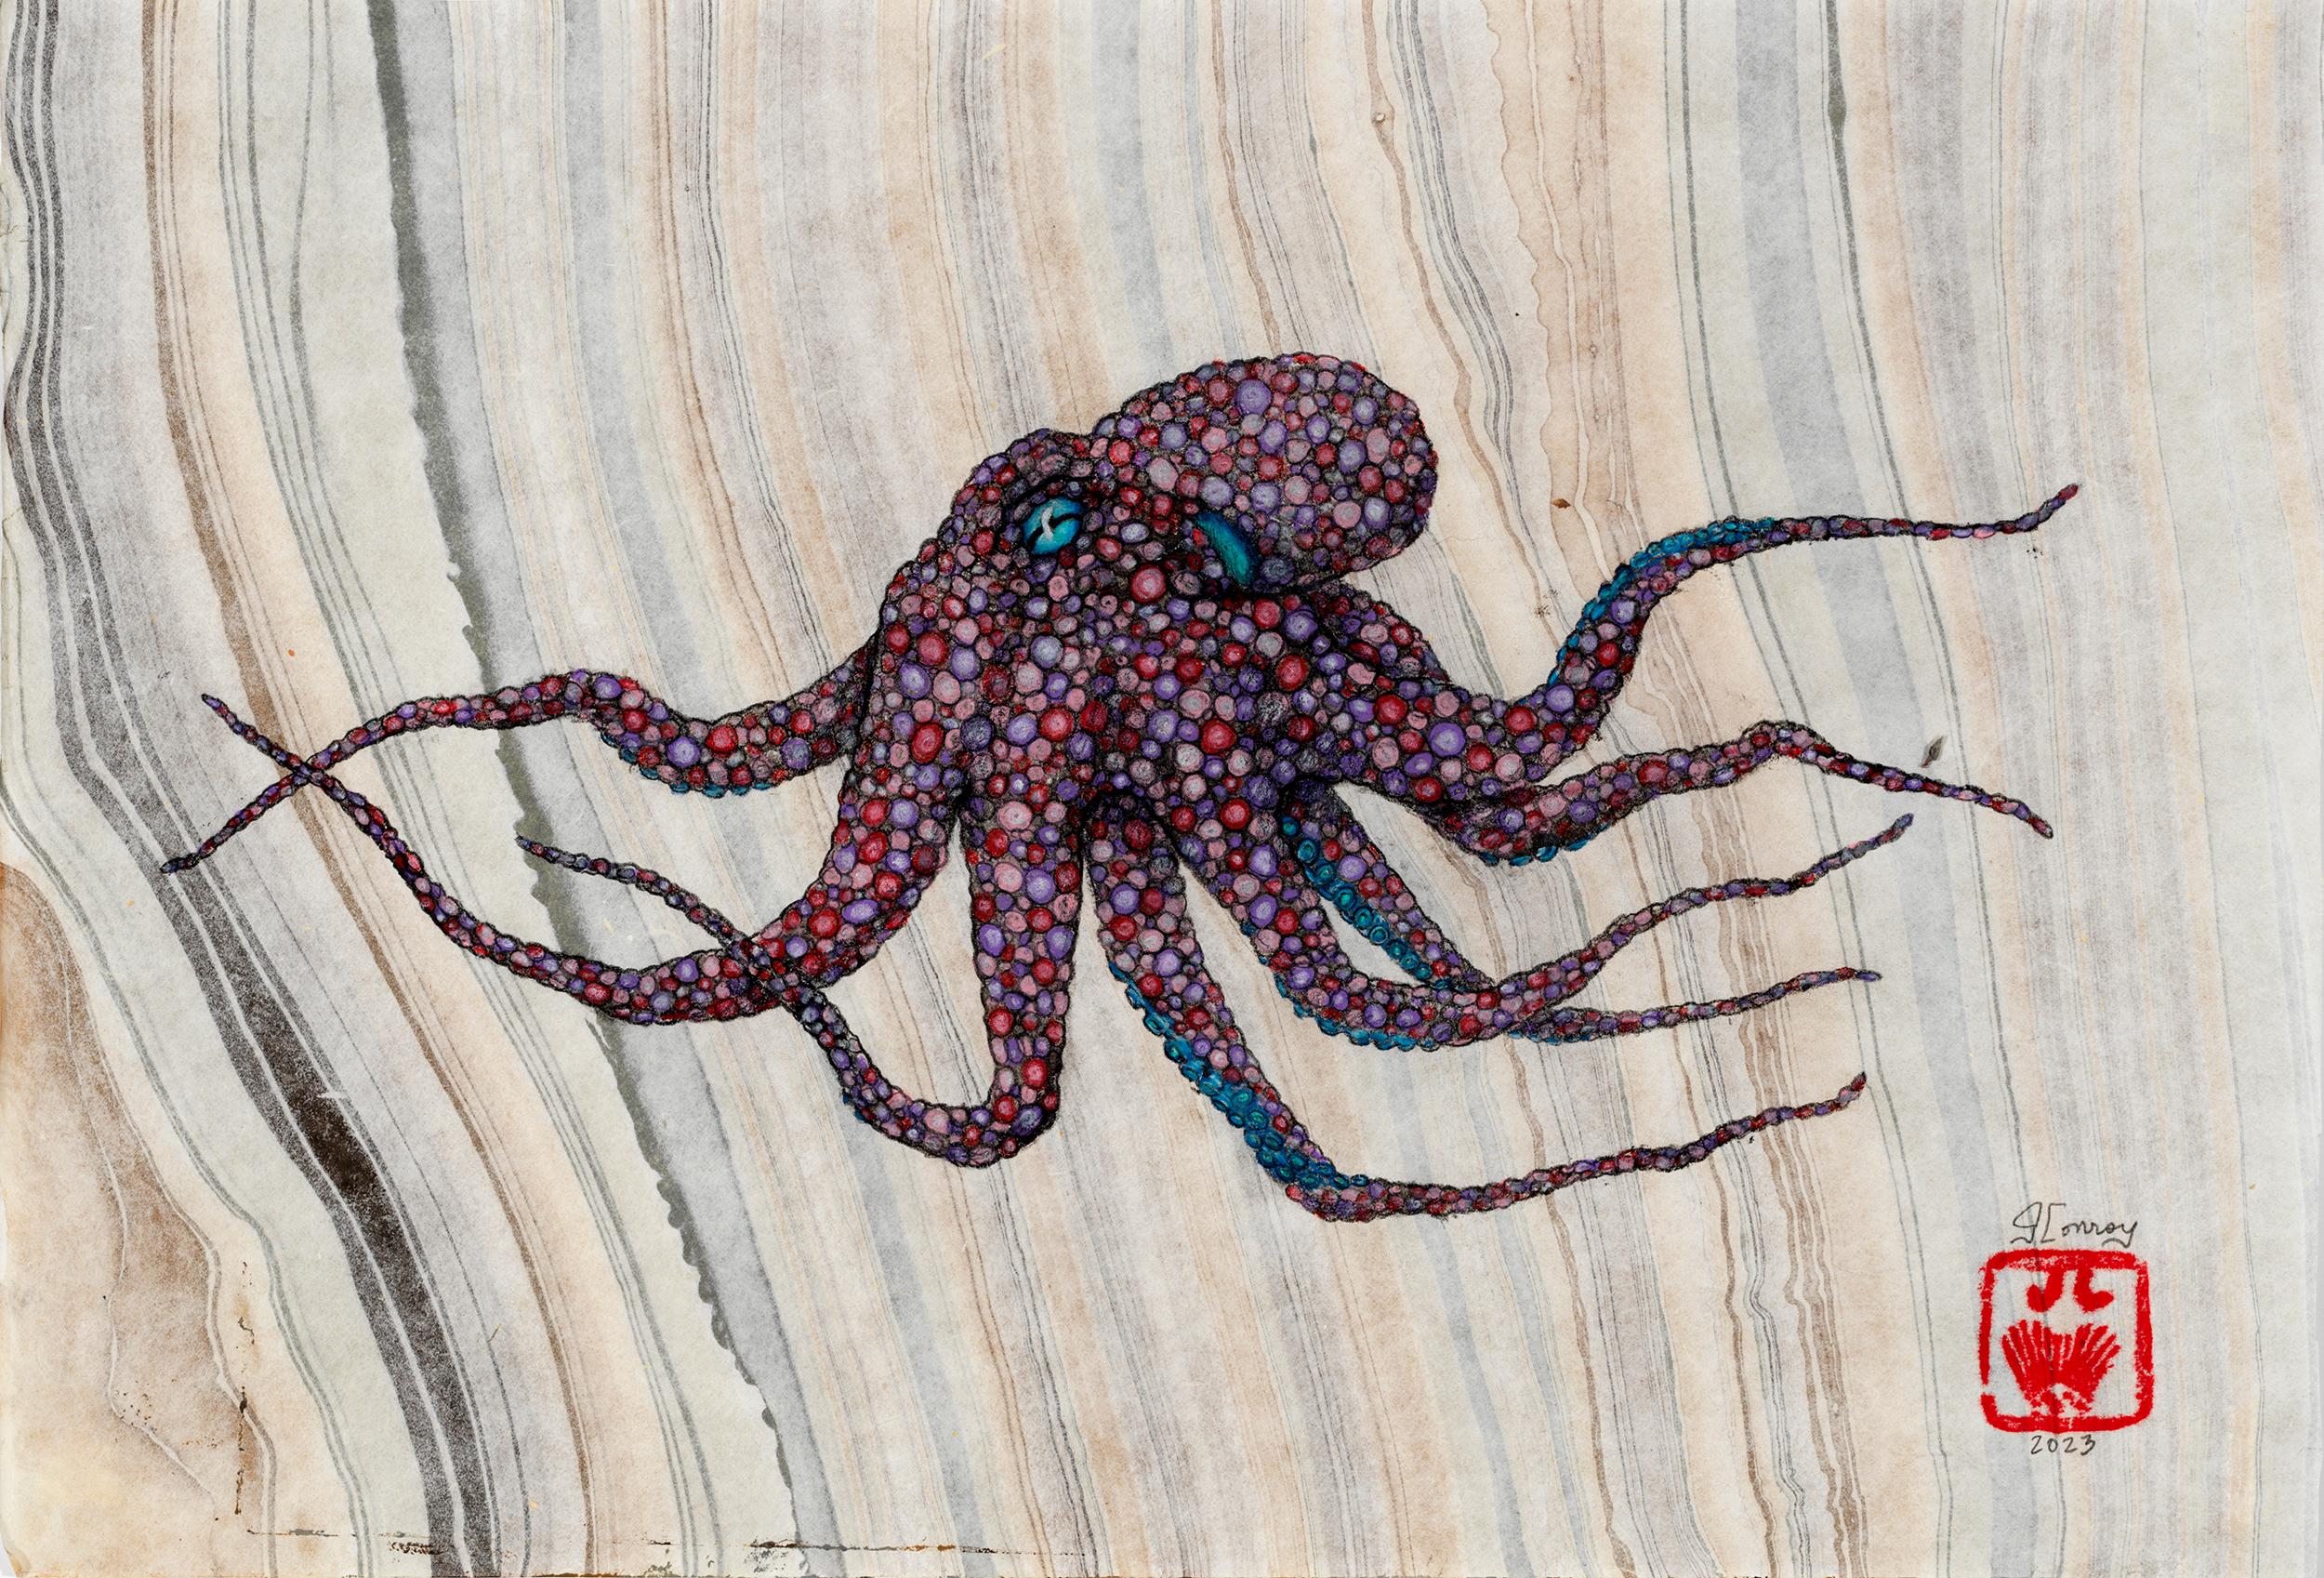 Jeff Conroy Animal Art - Red Moon Rising - Gyotaku Style Sumi Ink Painting of an Octopus 